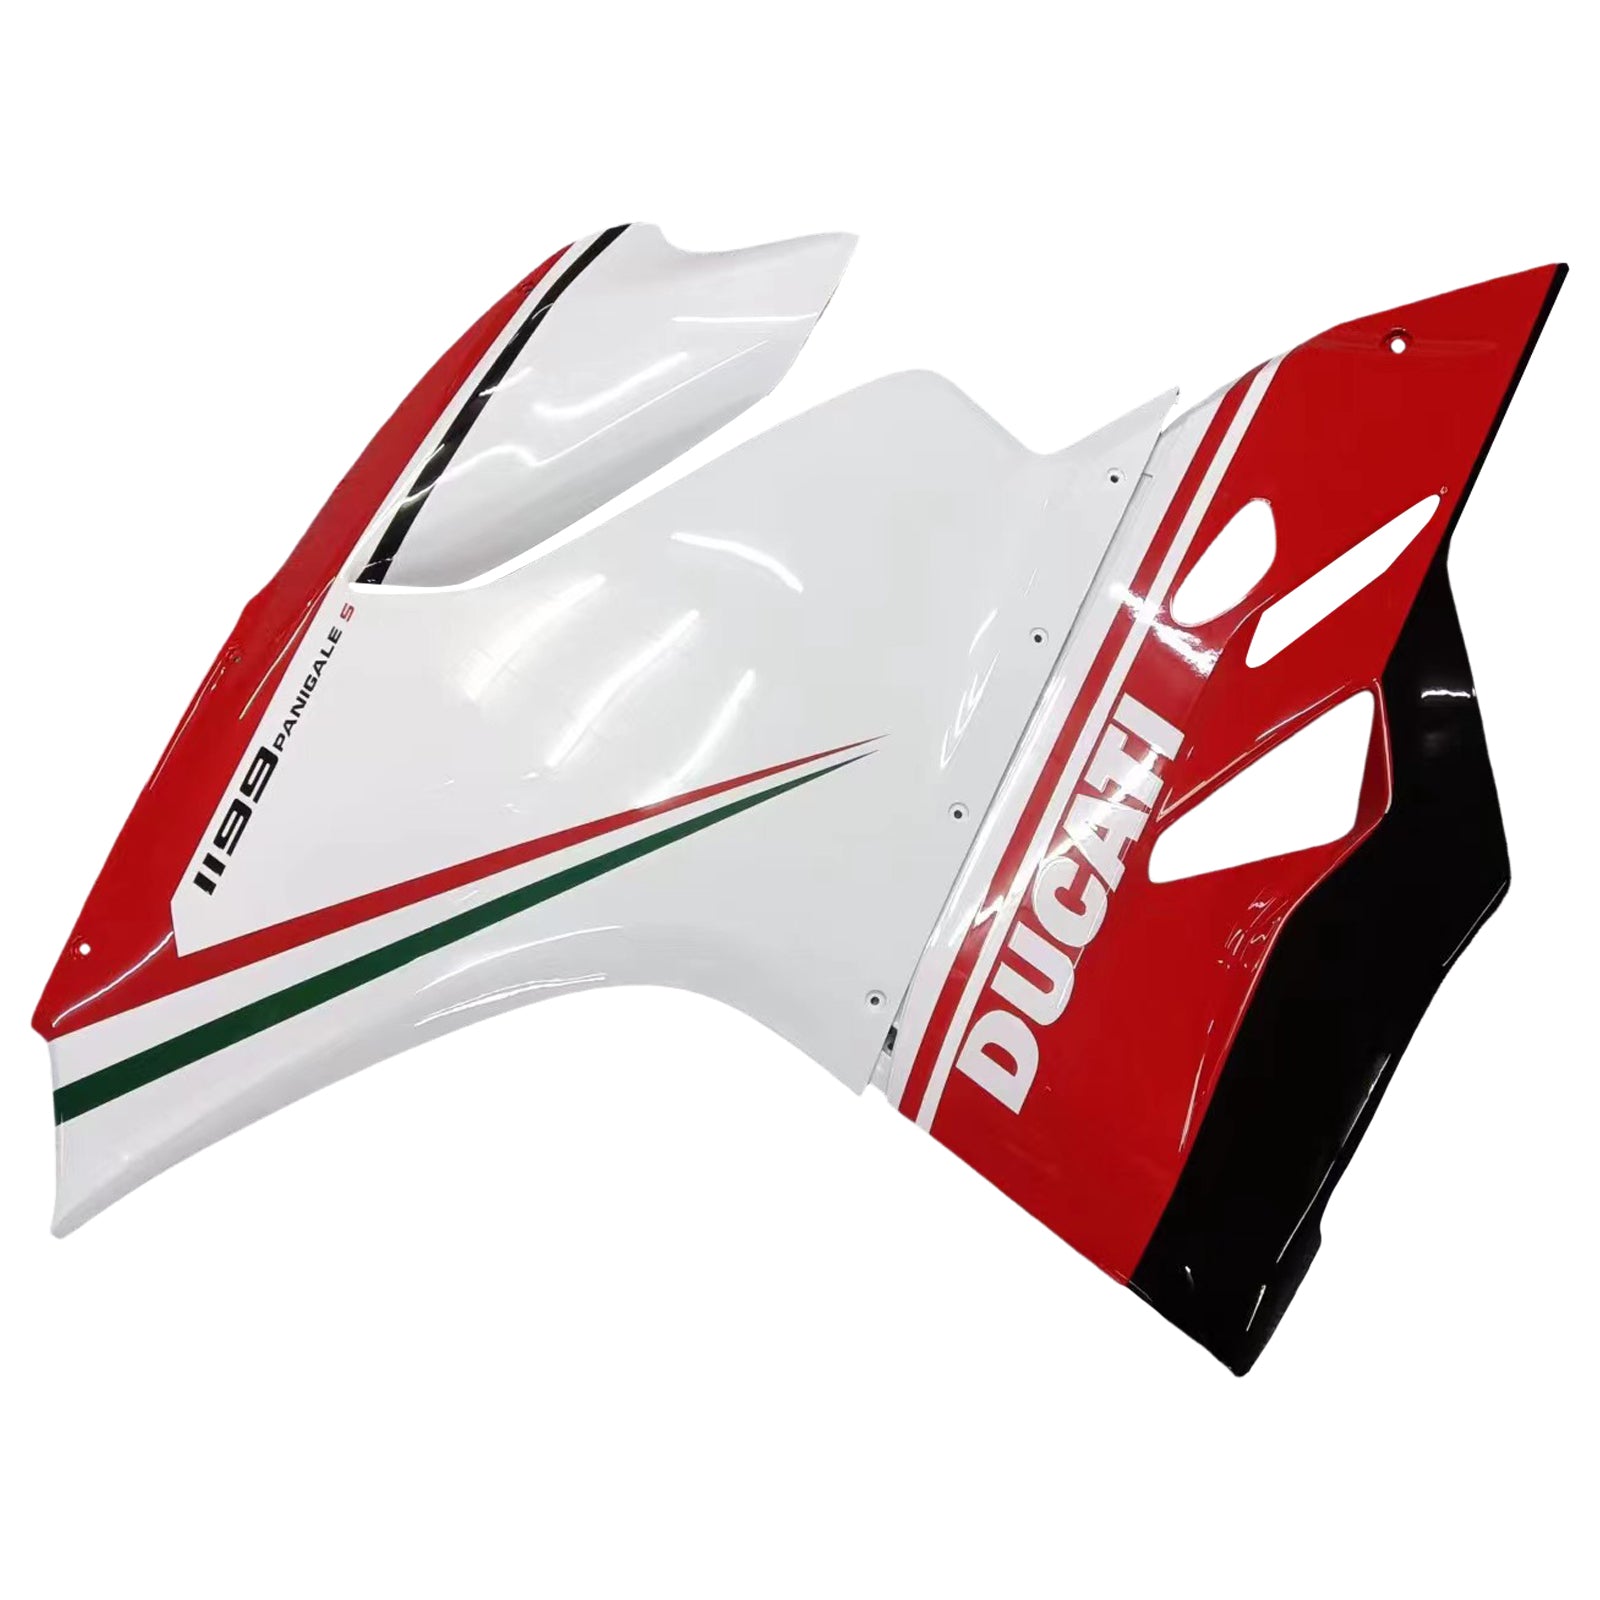 Amotopart 2012-2015 1199/899 Ducati Red&White Faring Kit